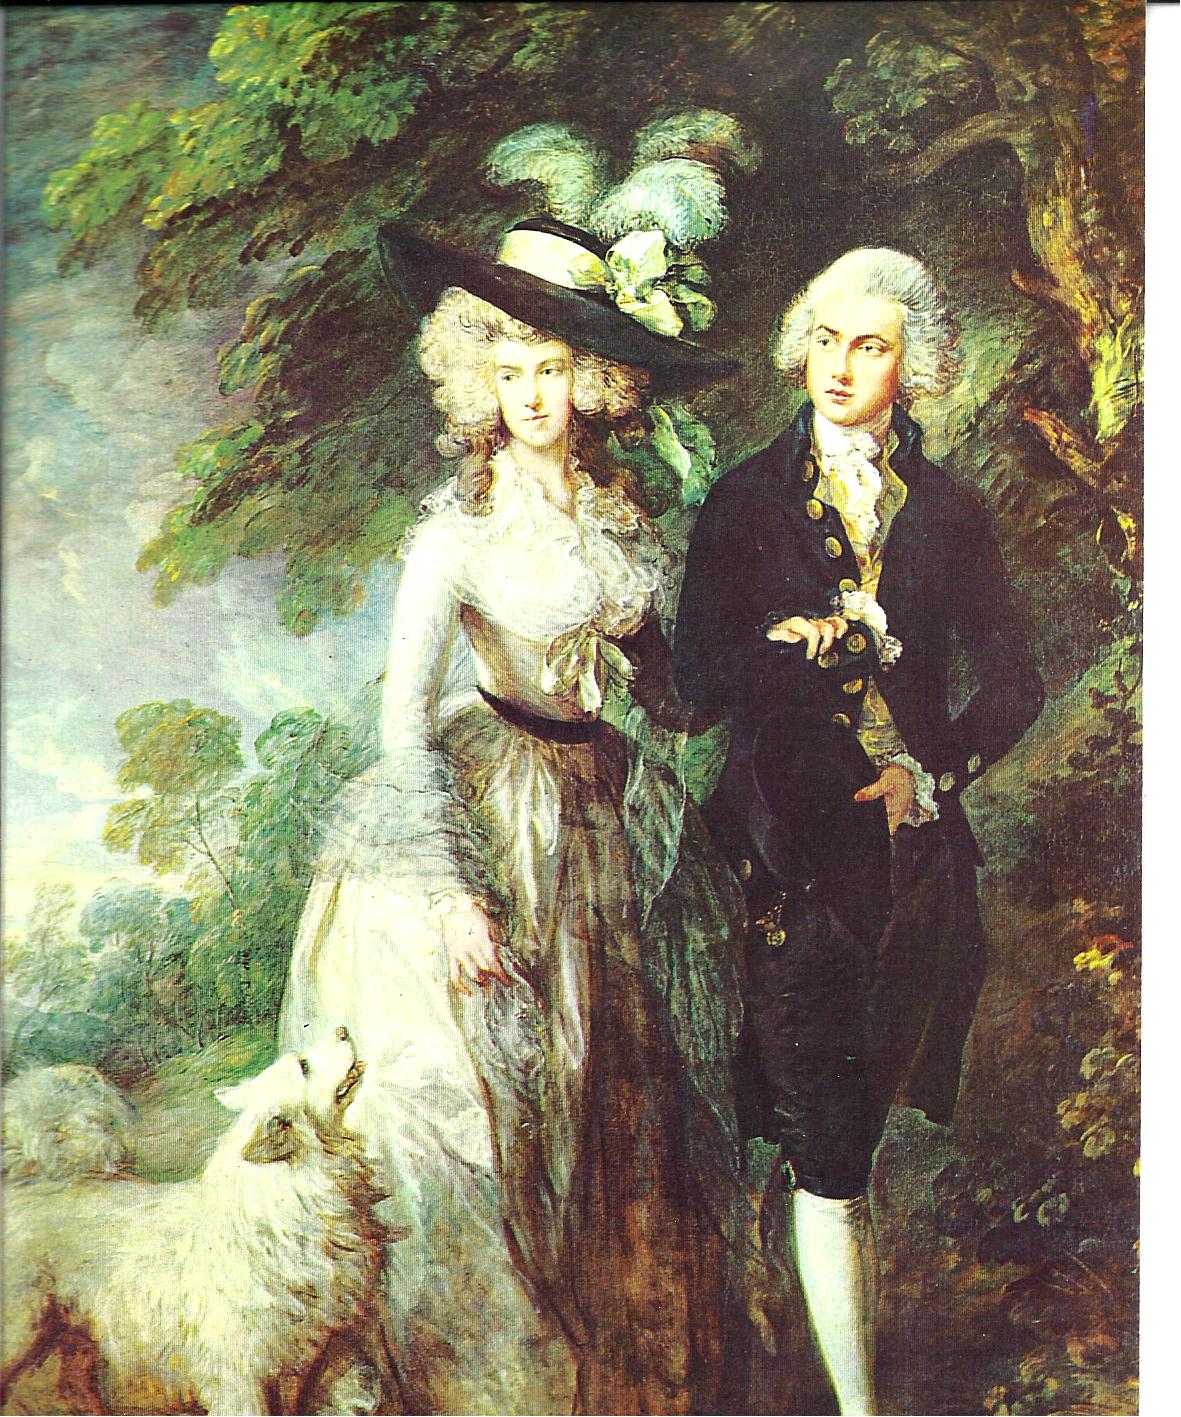 4 Thomas Gainsborough. "La passeggiata del mattino". Olio su tela, 1785. Londra, National Gallery